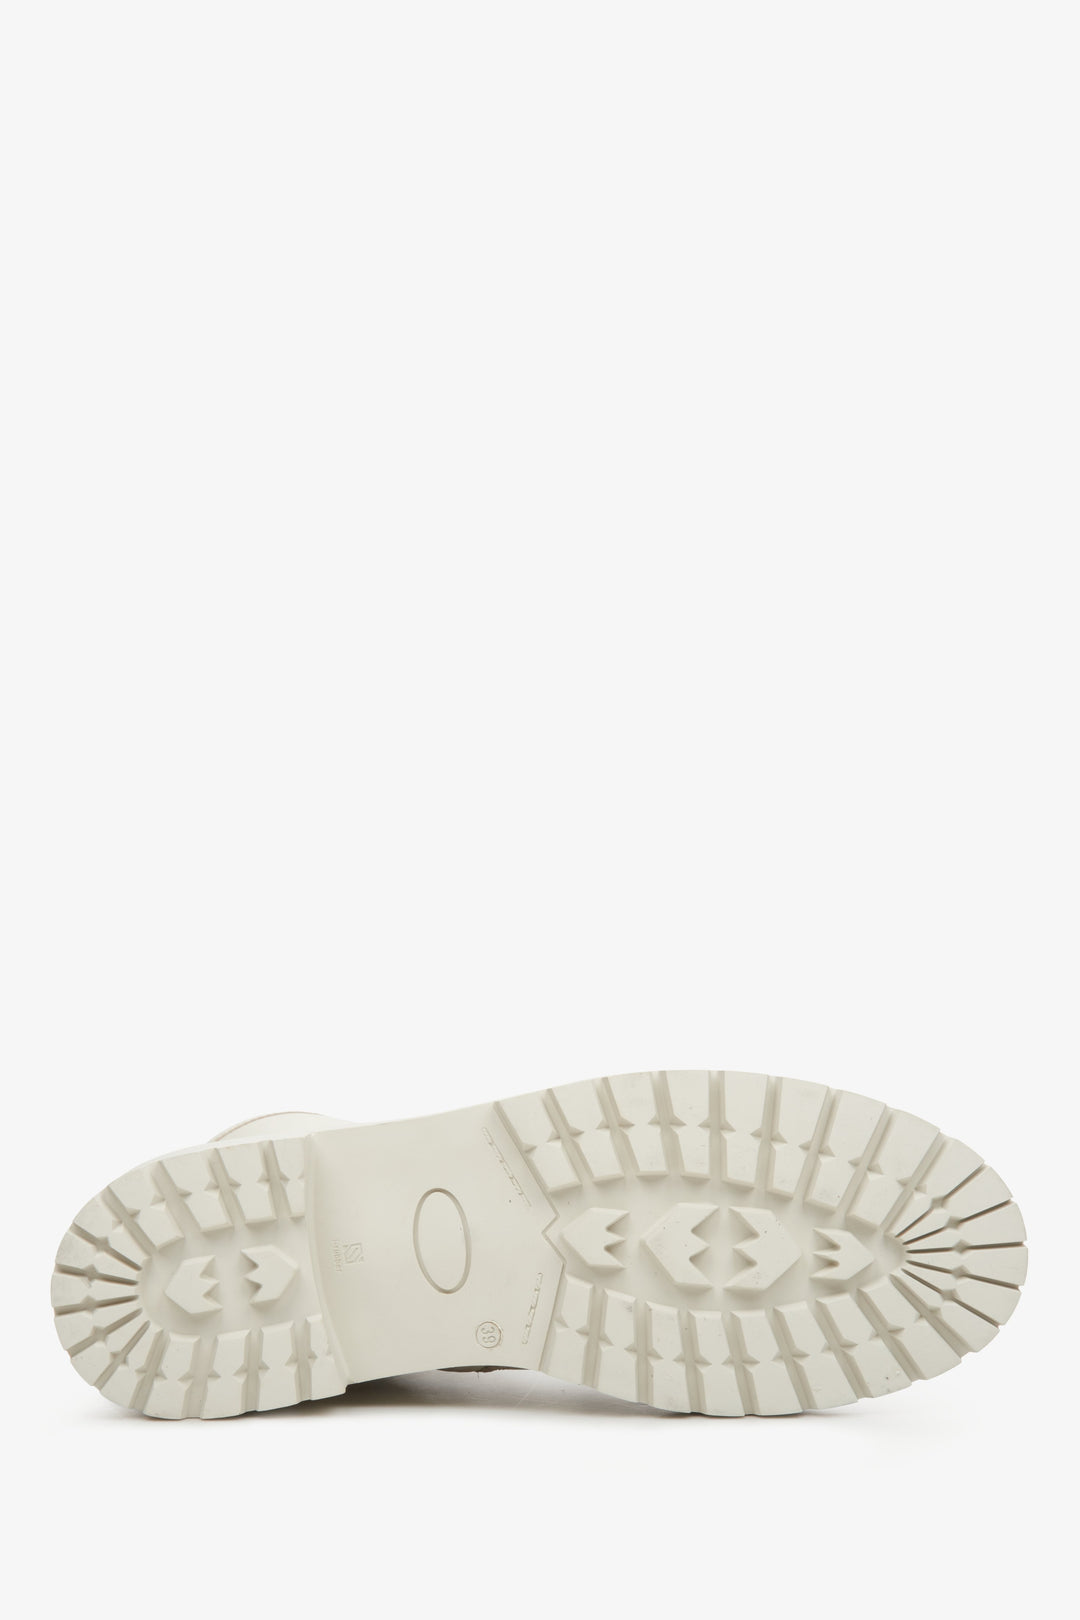 Women's light beige leather ankle boots Estro - a close-up on shoe sole.